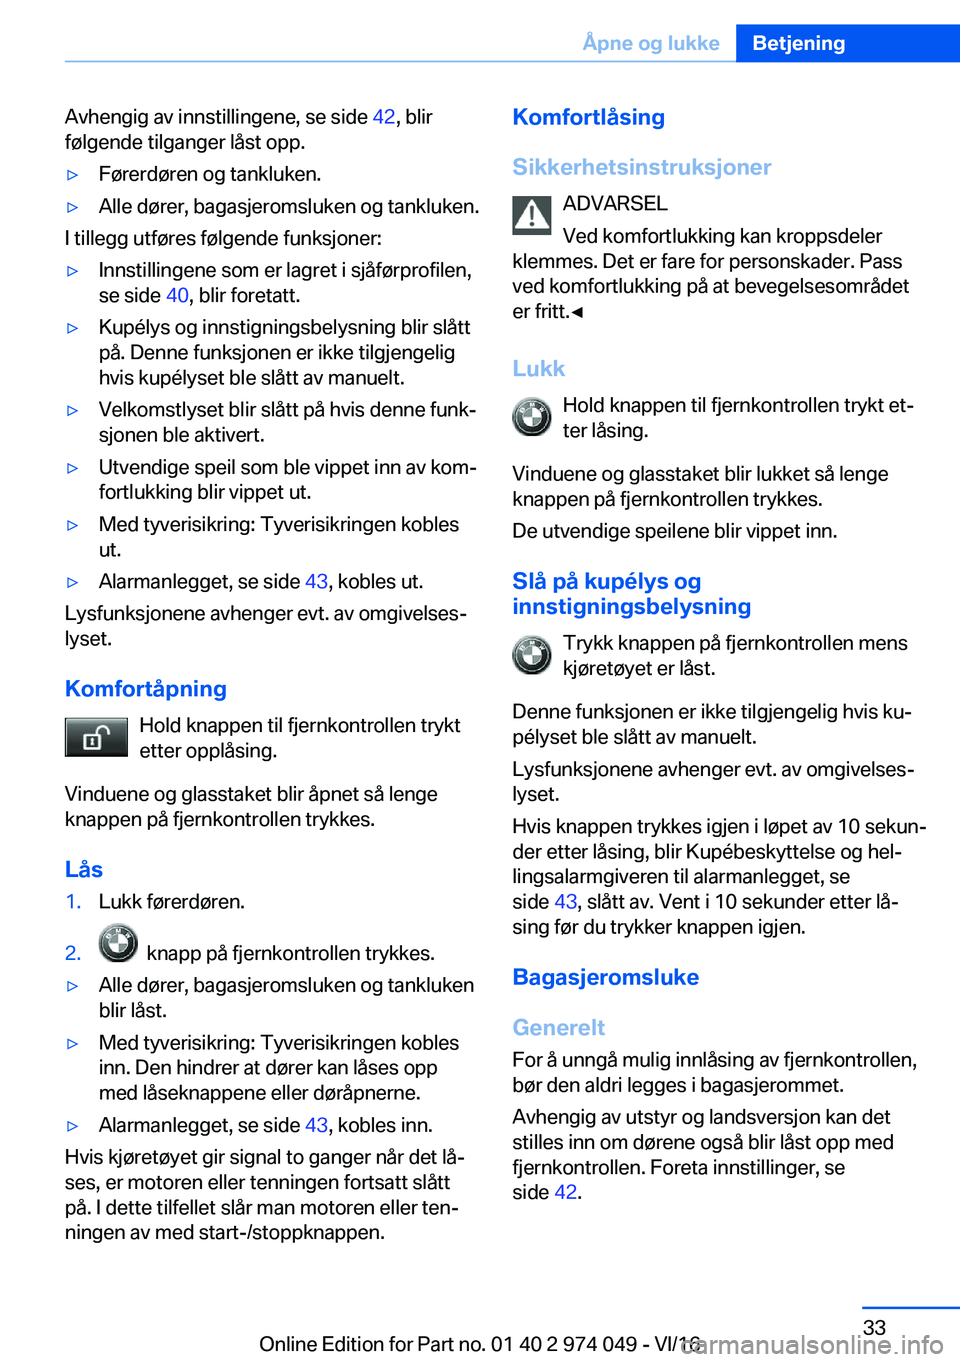 BMW M3 2017  Instructieboekjes (in Dutch) �A�v�h�e�n�g�i�g� �a�v� �i�n�n�s�t�i�l�l�i�n�g�e�n�e�,� �s�e� �s�i�d�e� �4�2�,� �b�l�i�r
�f�